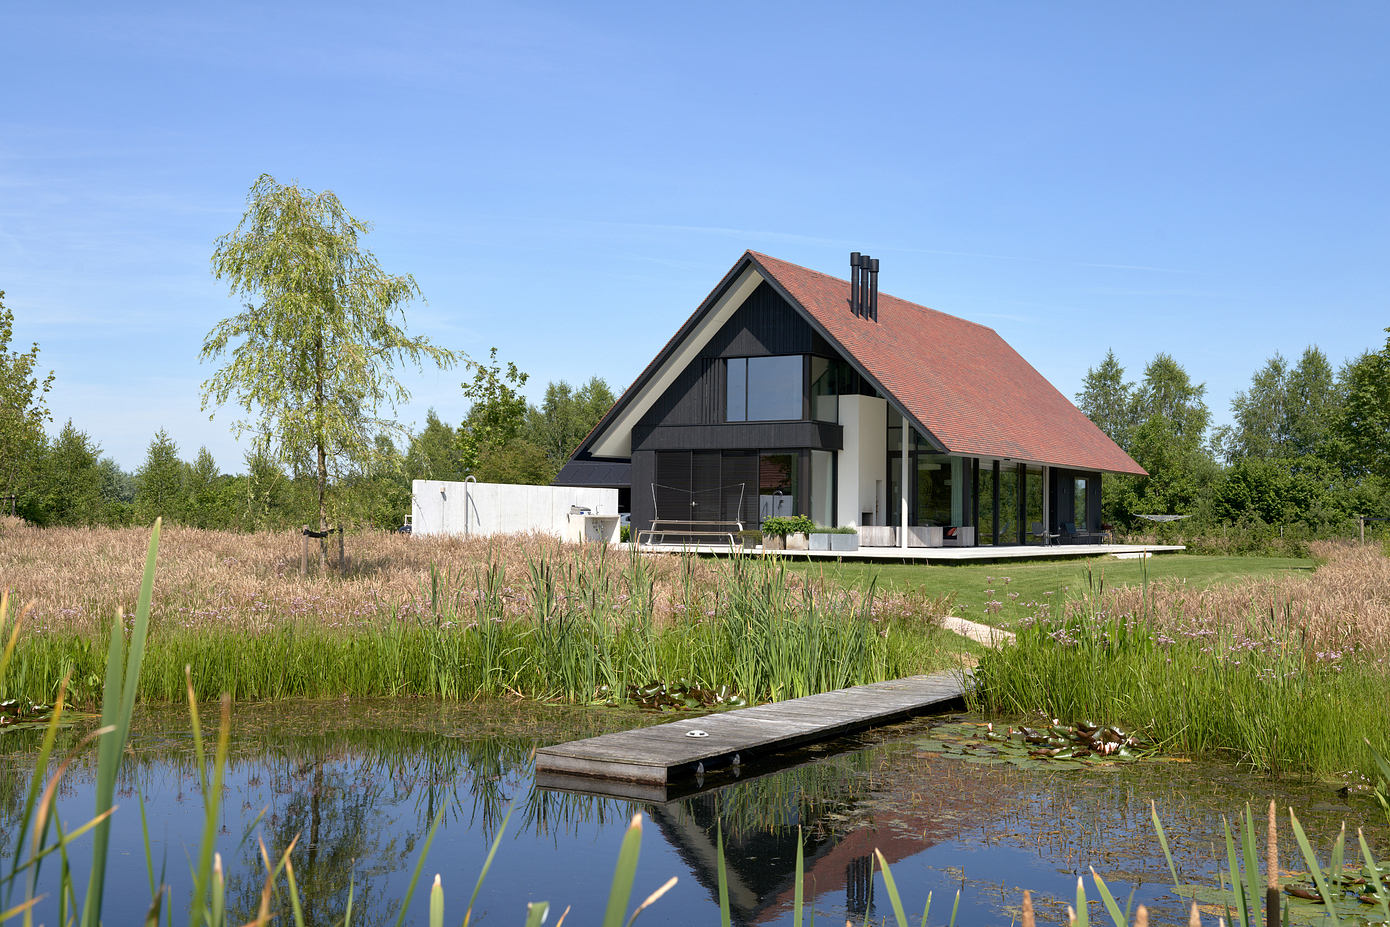 Villa Hoefsevonder: Unique House Design in Dutch Landscape